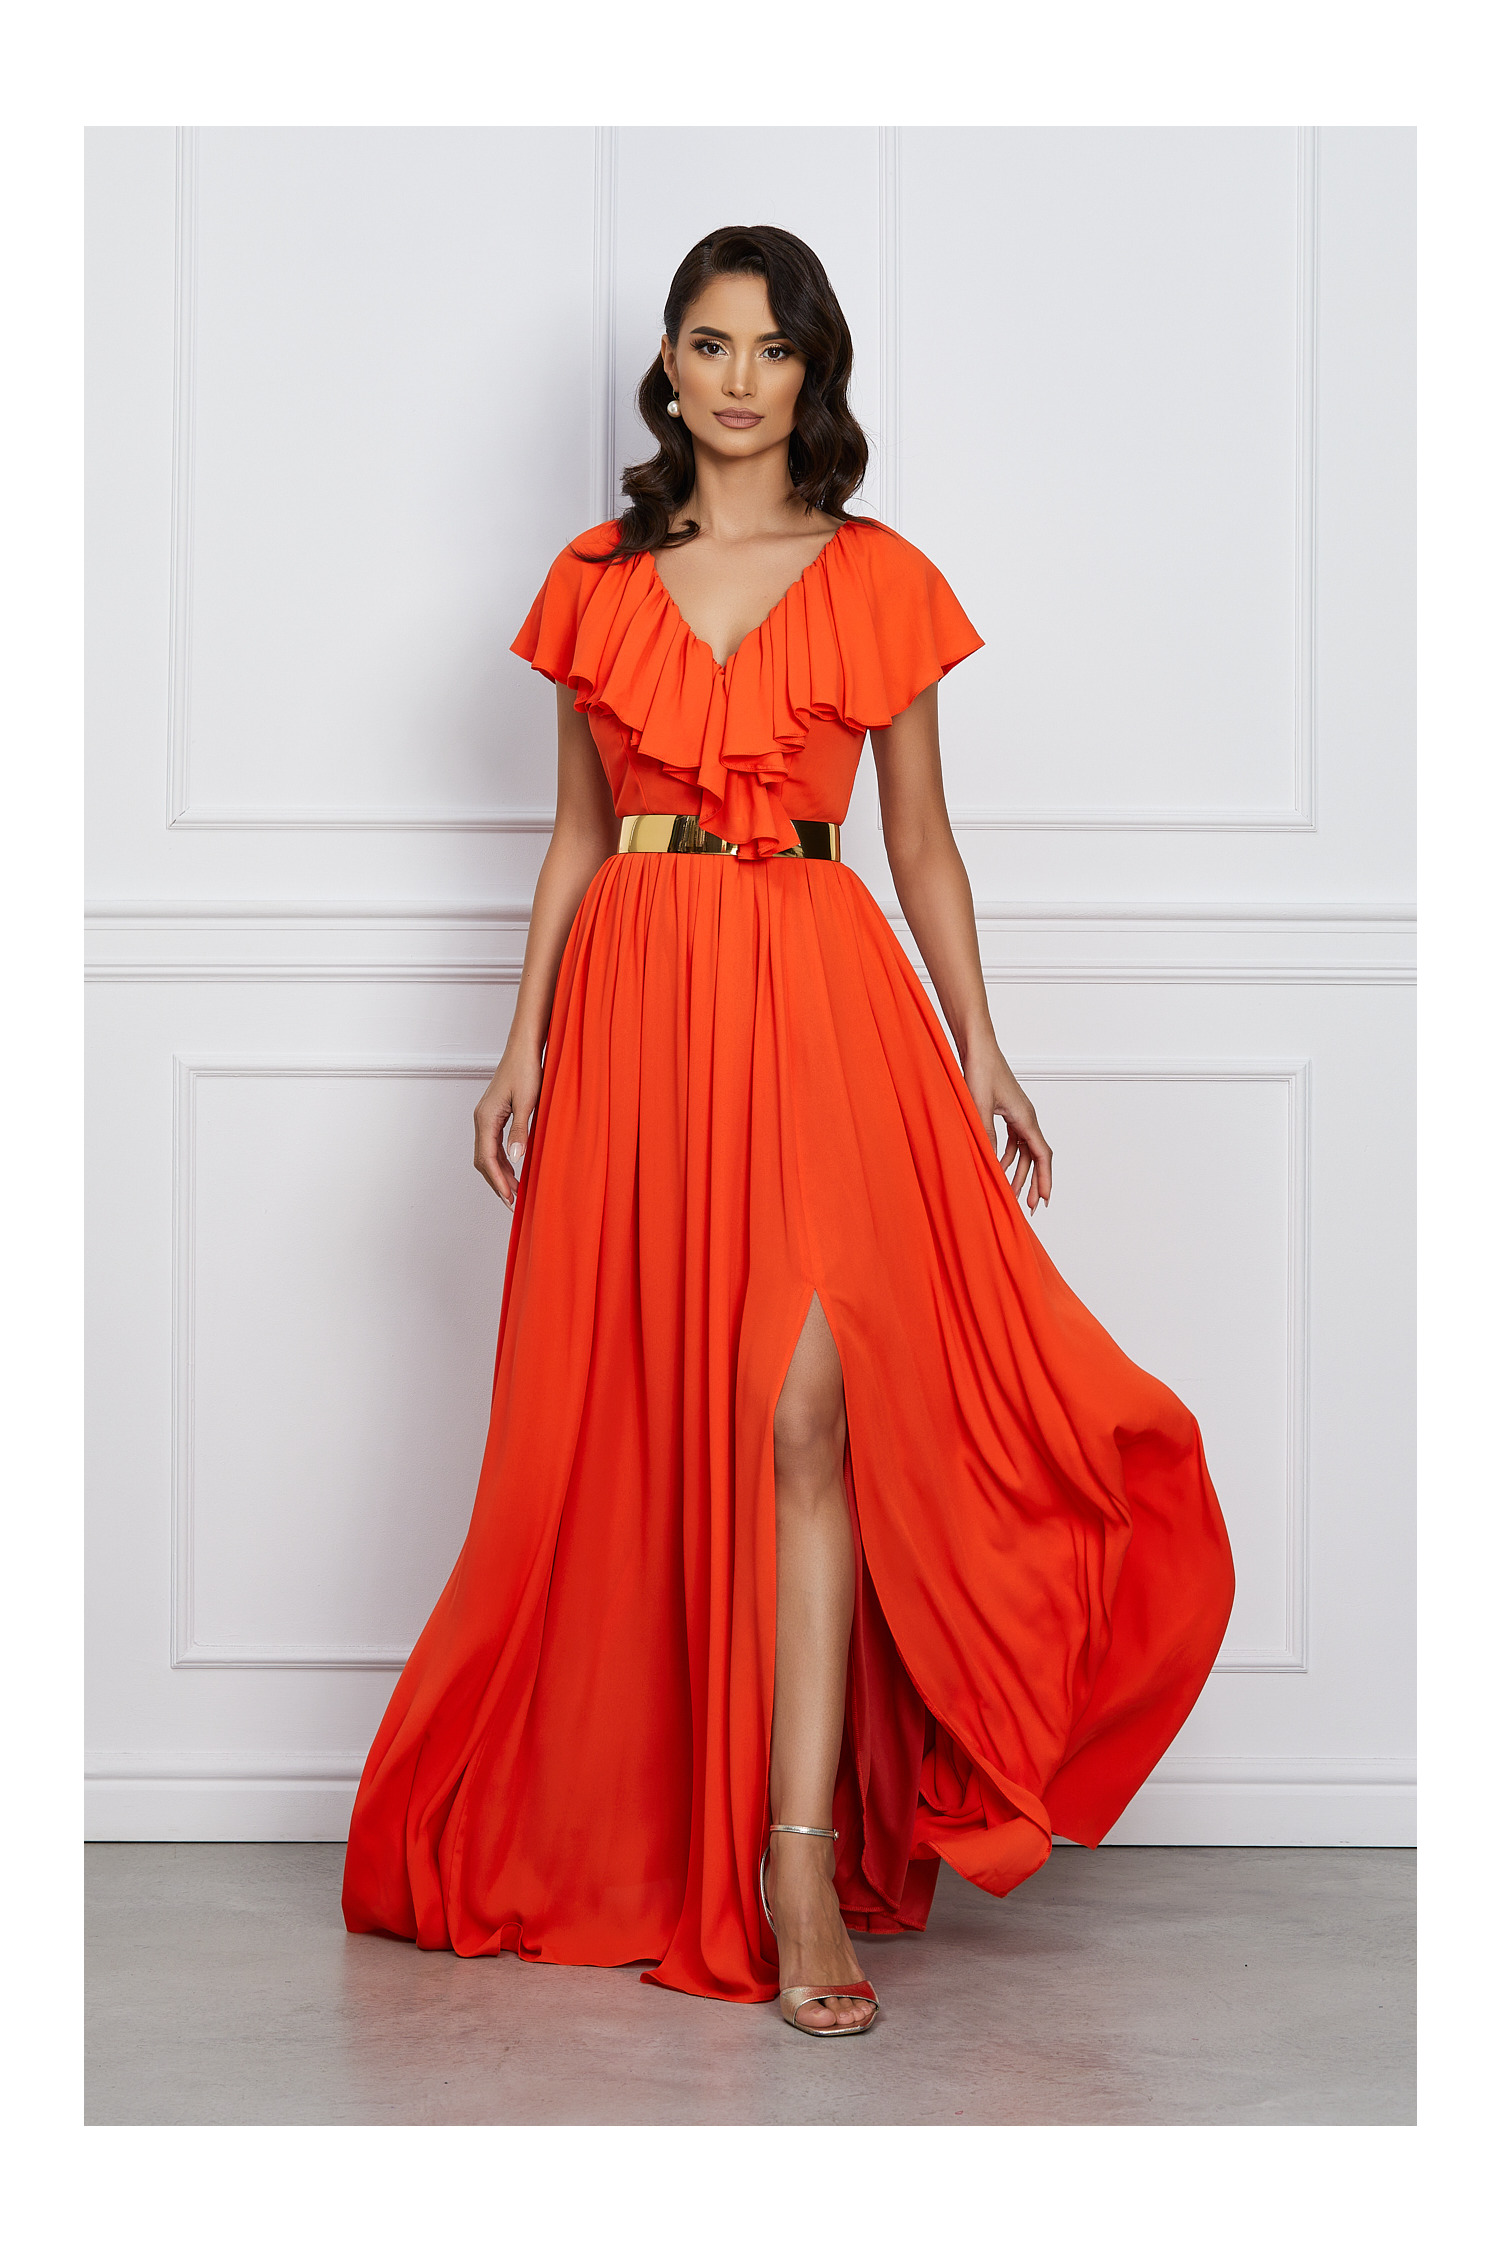 Rochie Dy Fashion Gaby lunga orange cu volanase la decolteu si curea in talie